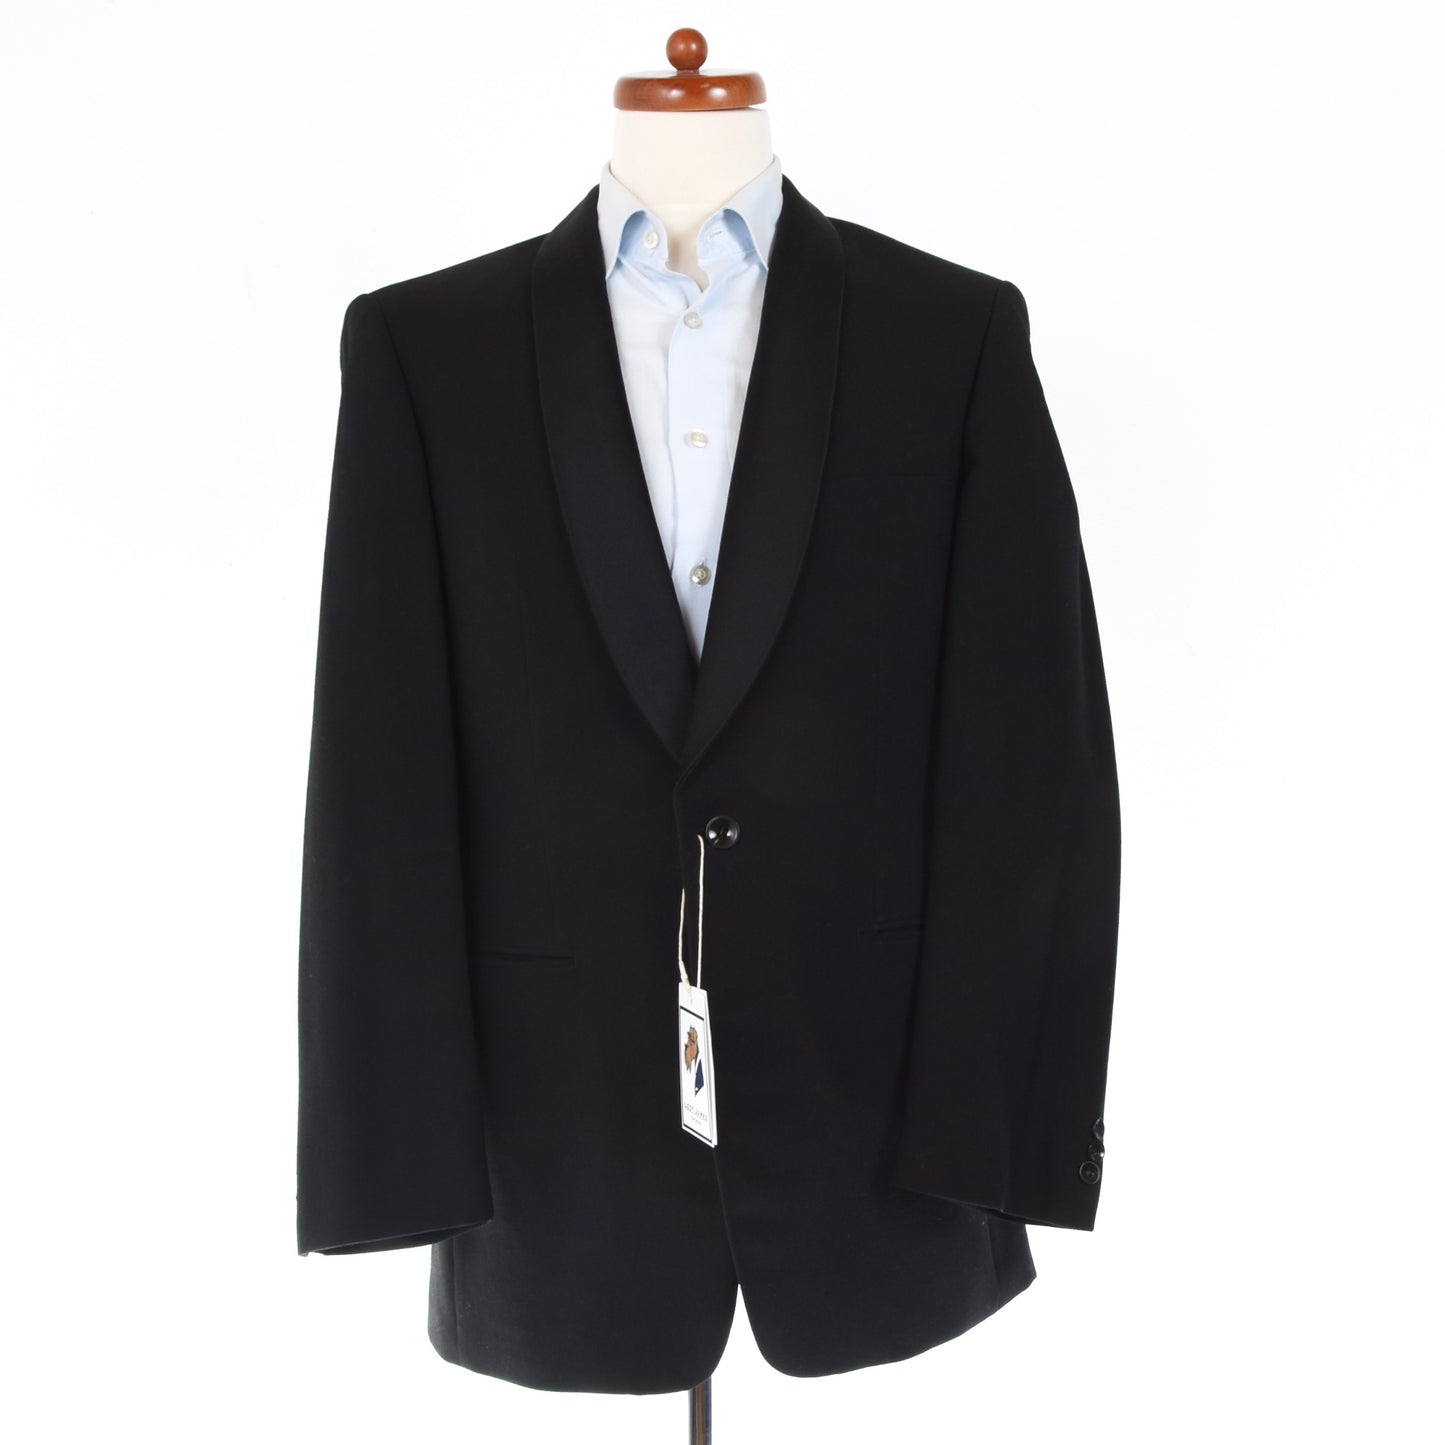 Vintage Handsewn Shawl Lapel Wool Tuxedo - Black